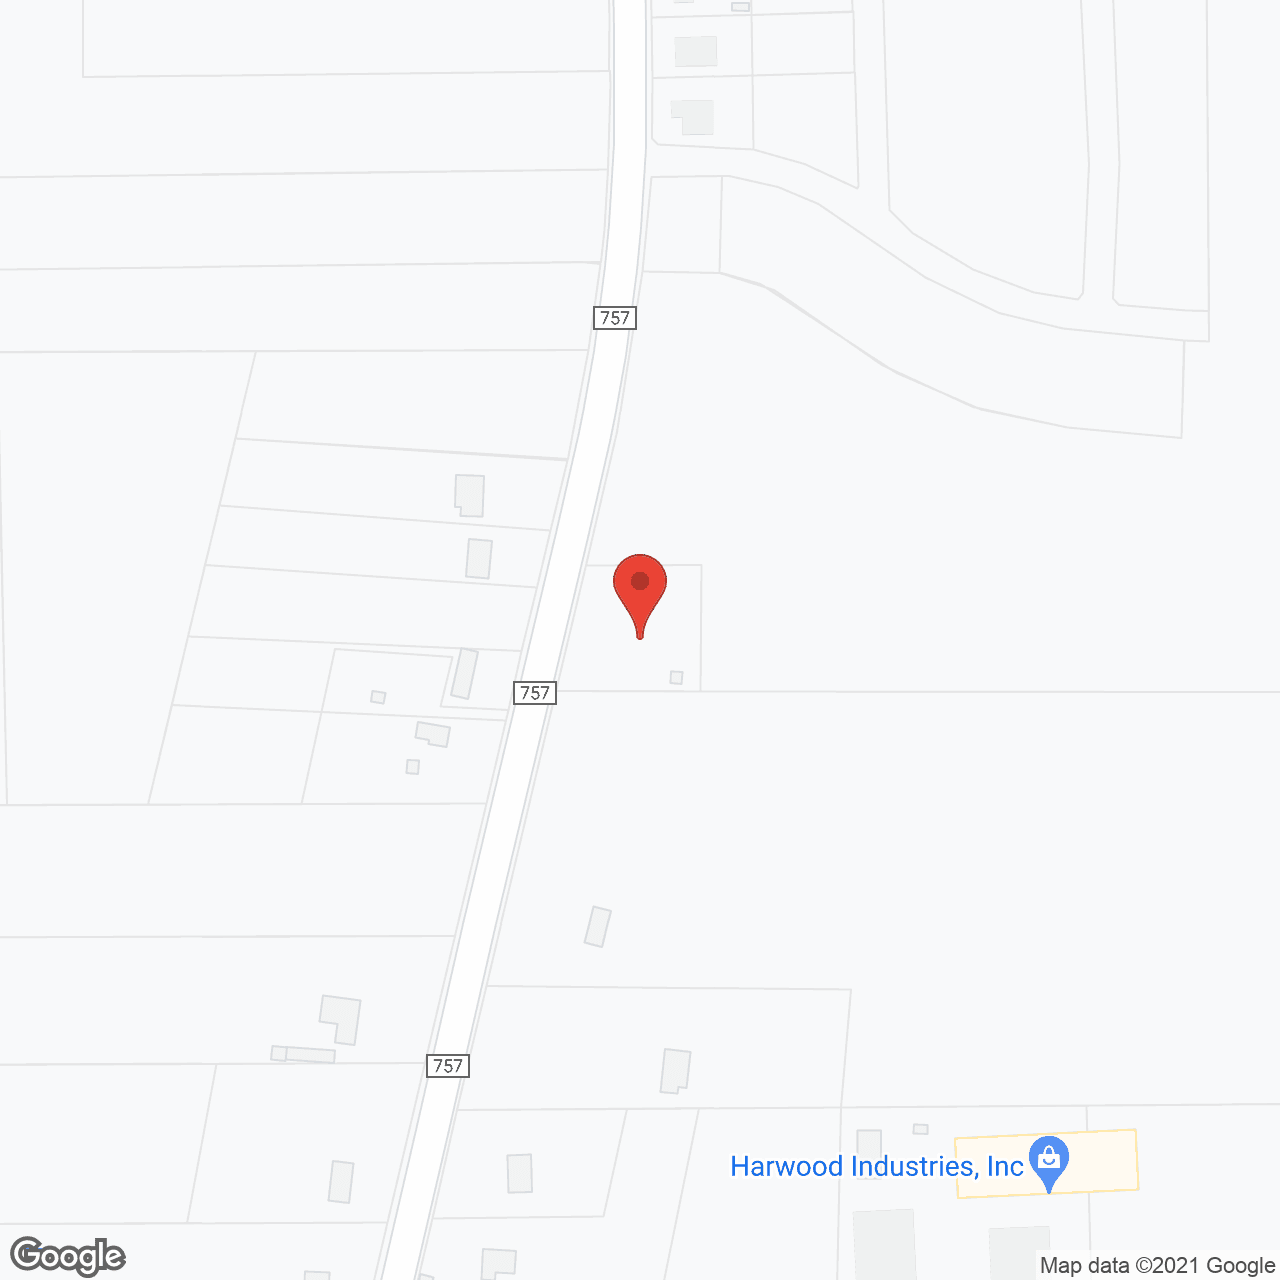 Redbird Manor in google map